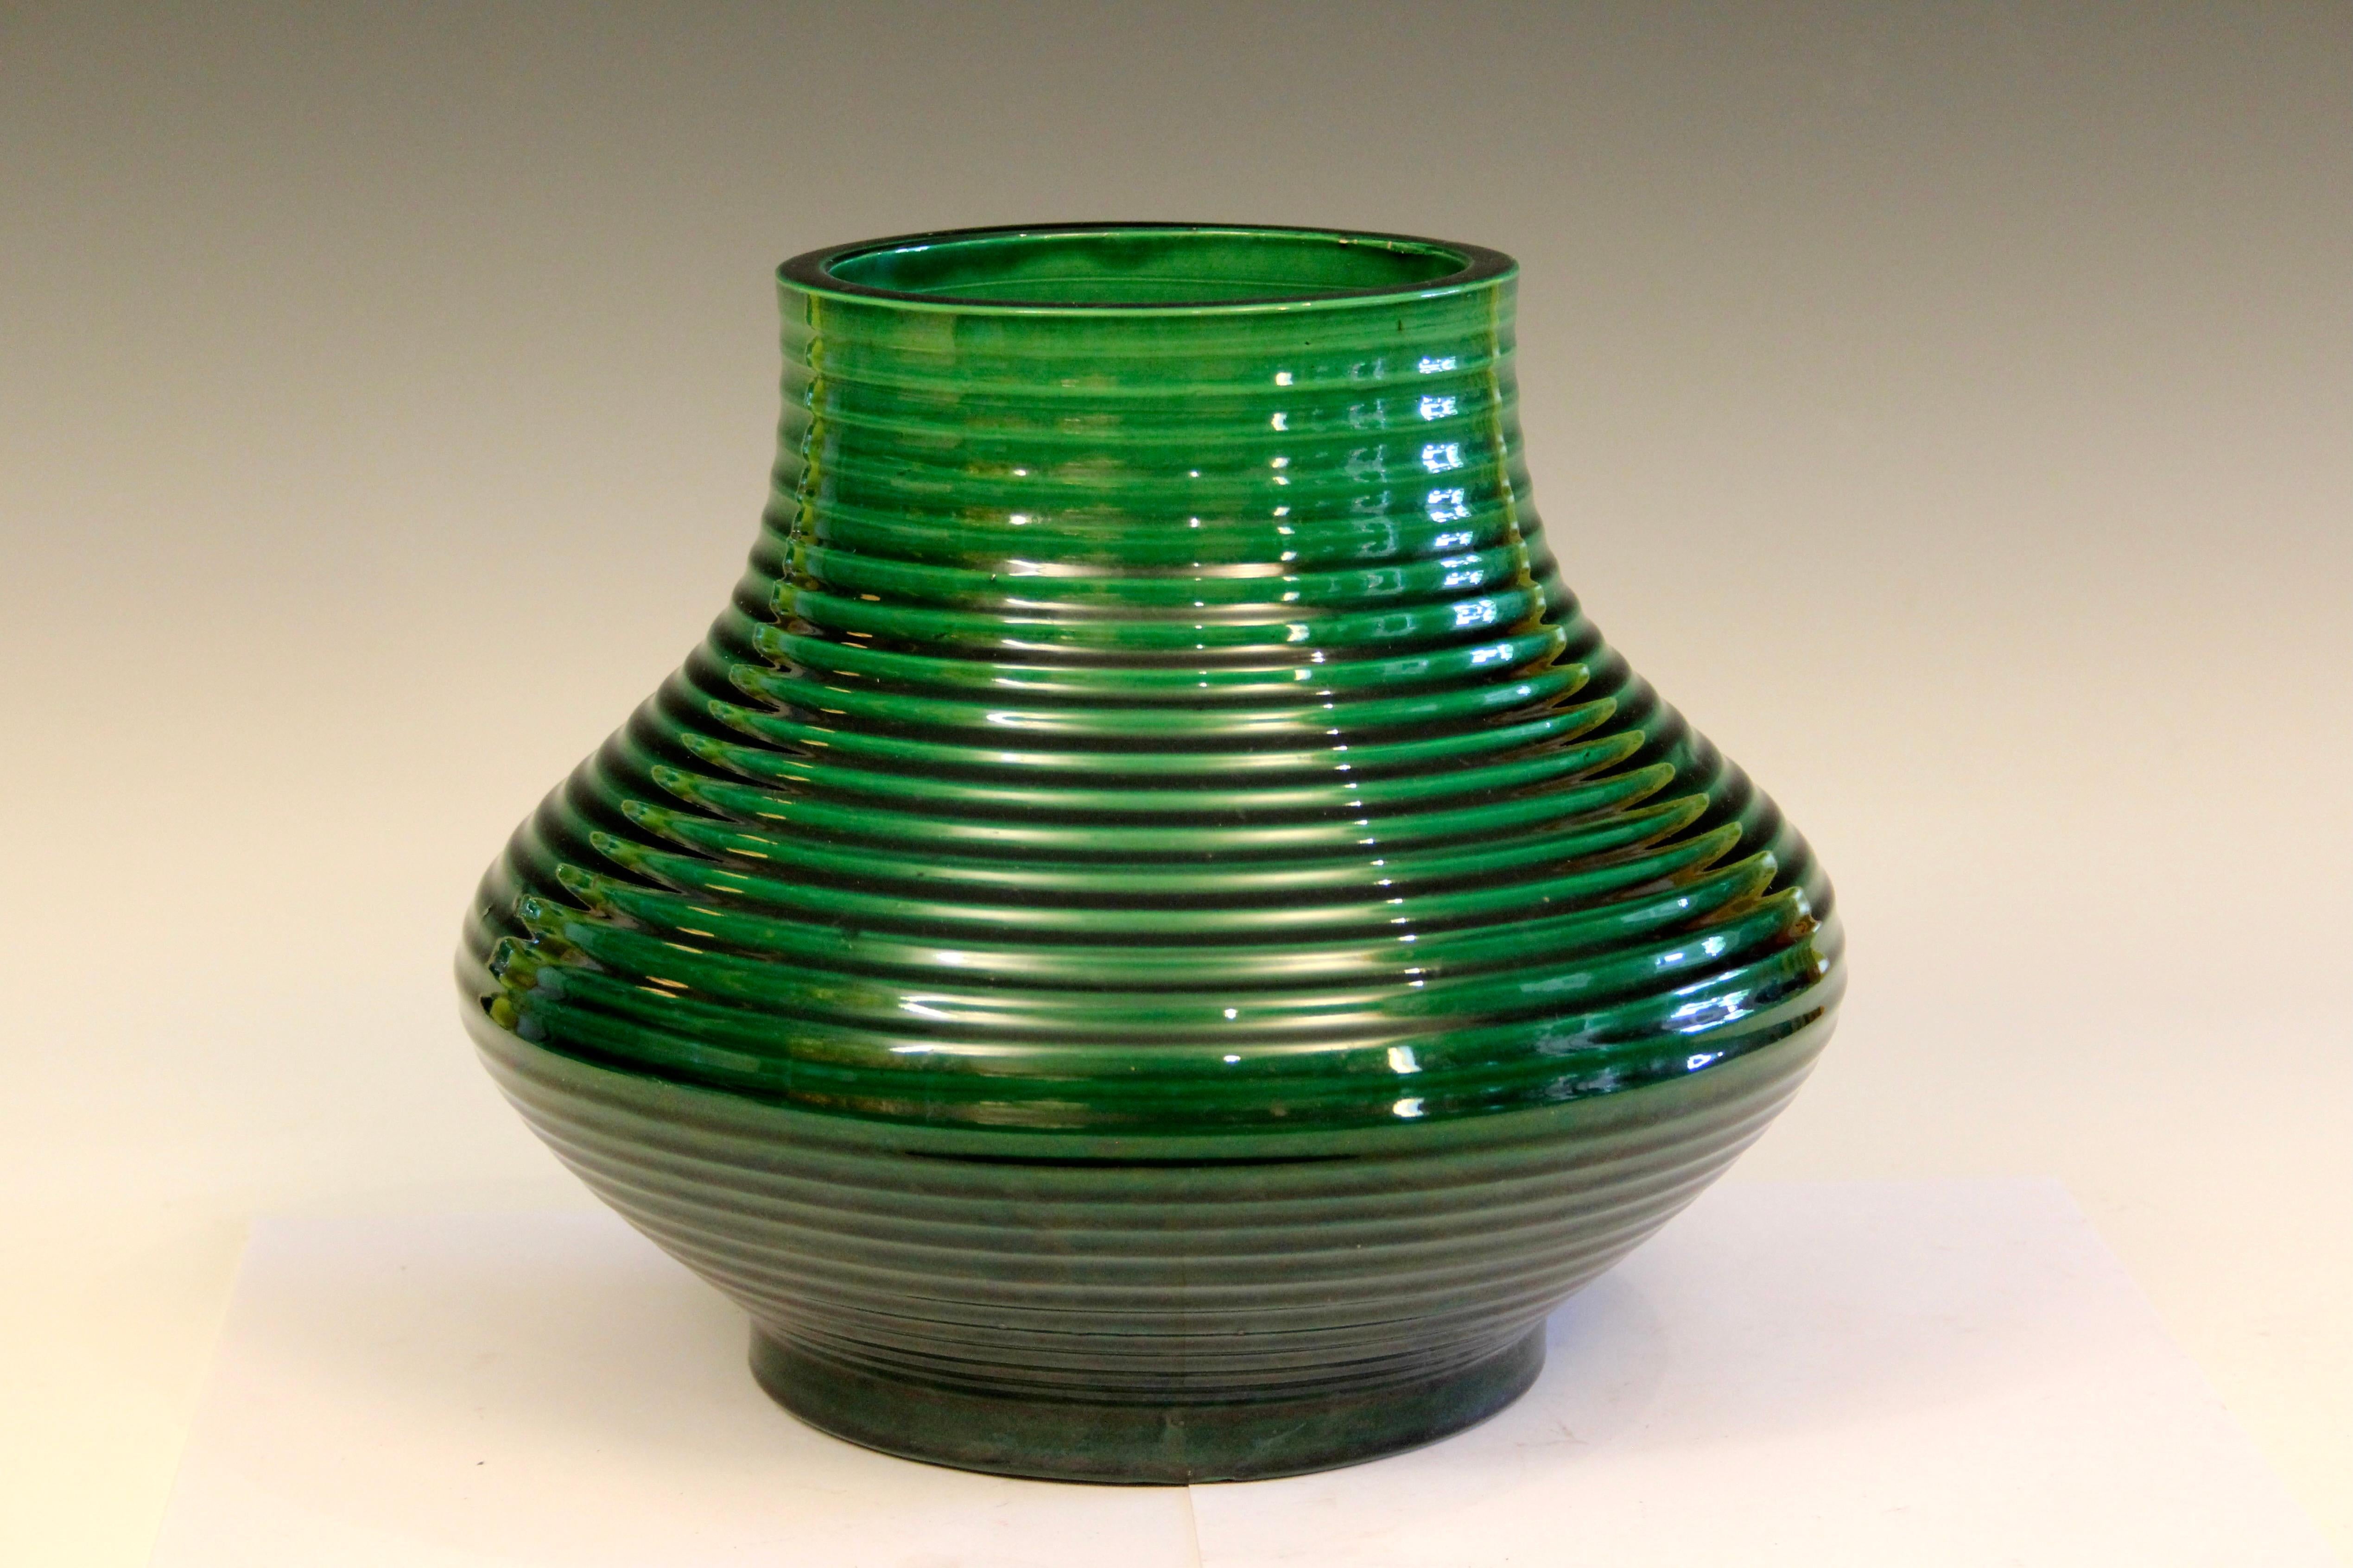 Early 20th Century Antique Awaji Pottery Vase Swirl Green Large Monochrome Art Nouveau